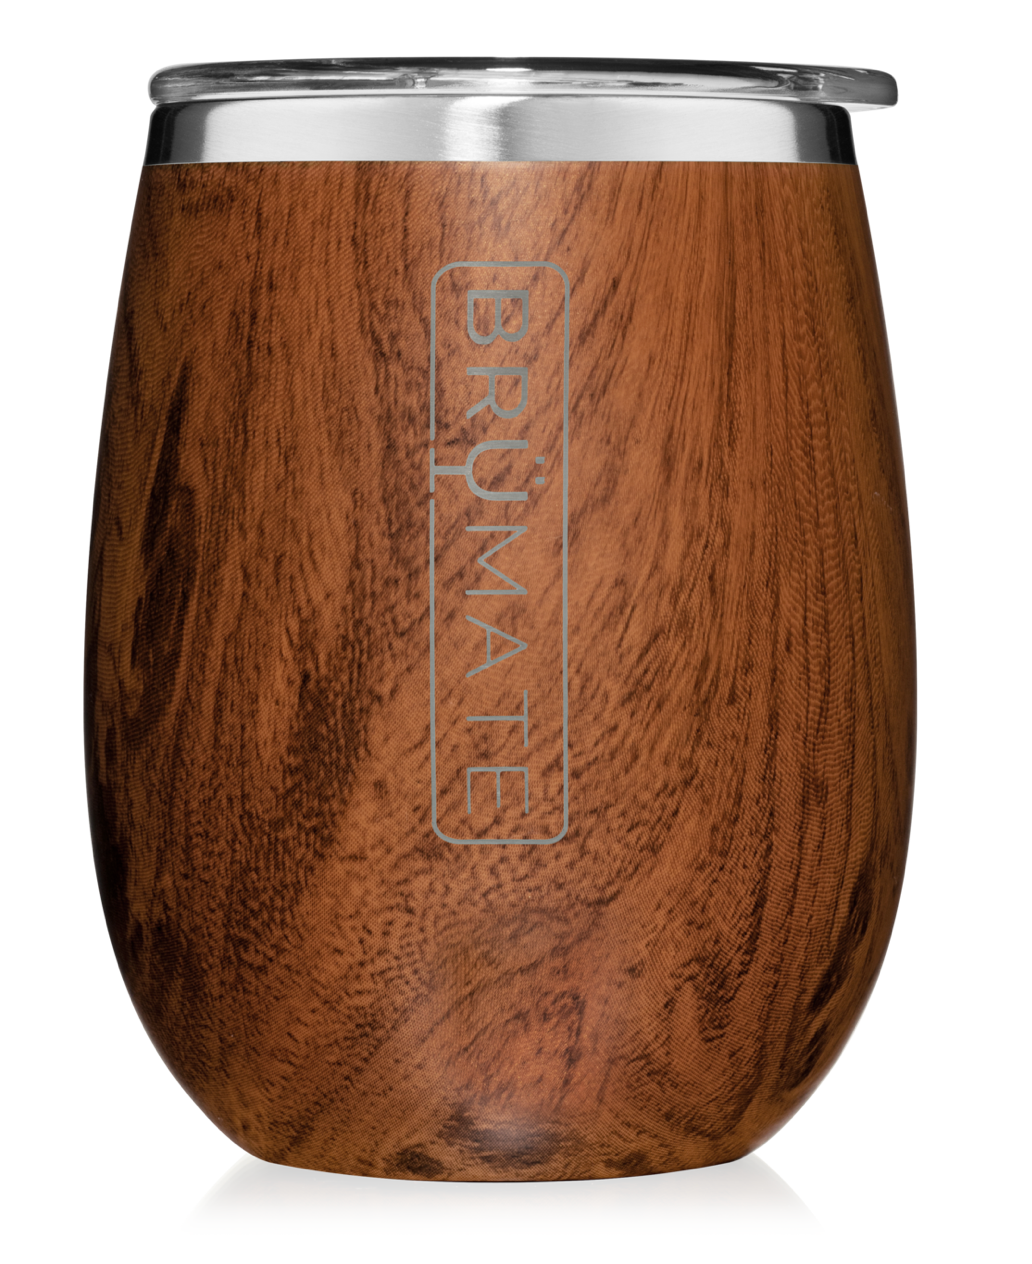 BruMate Uncork'd XL 14 oz. Wine Tumbler-Seafoam